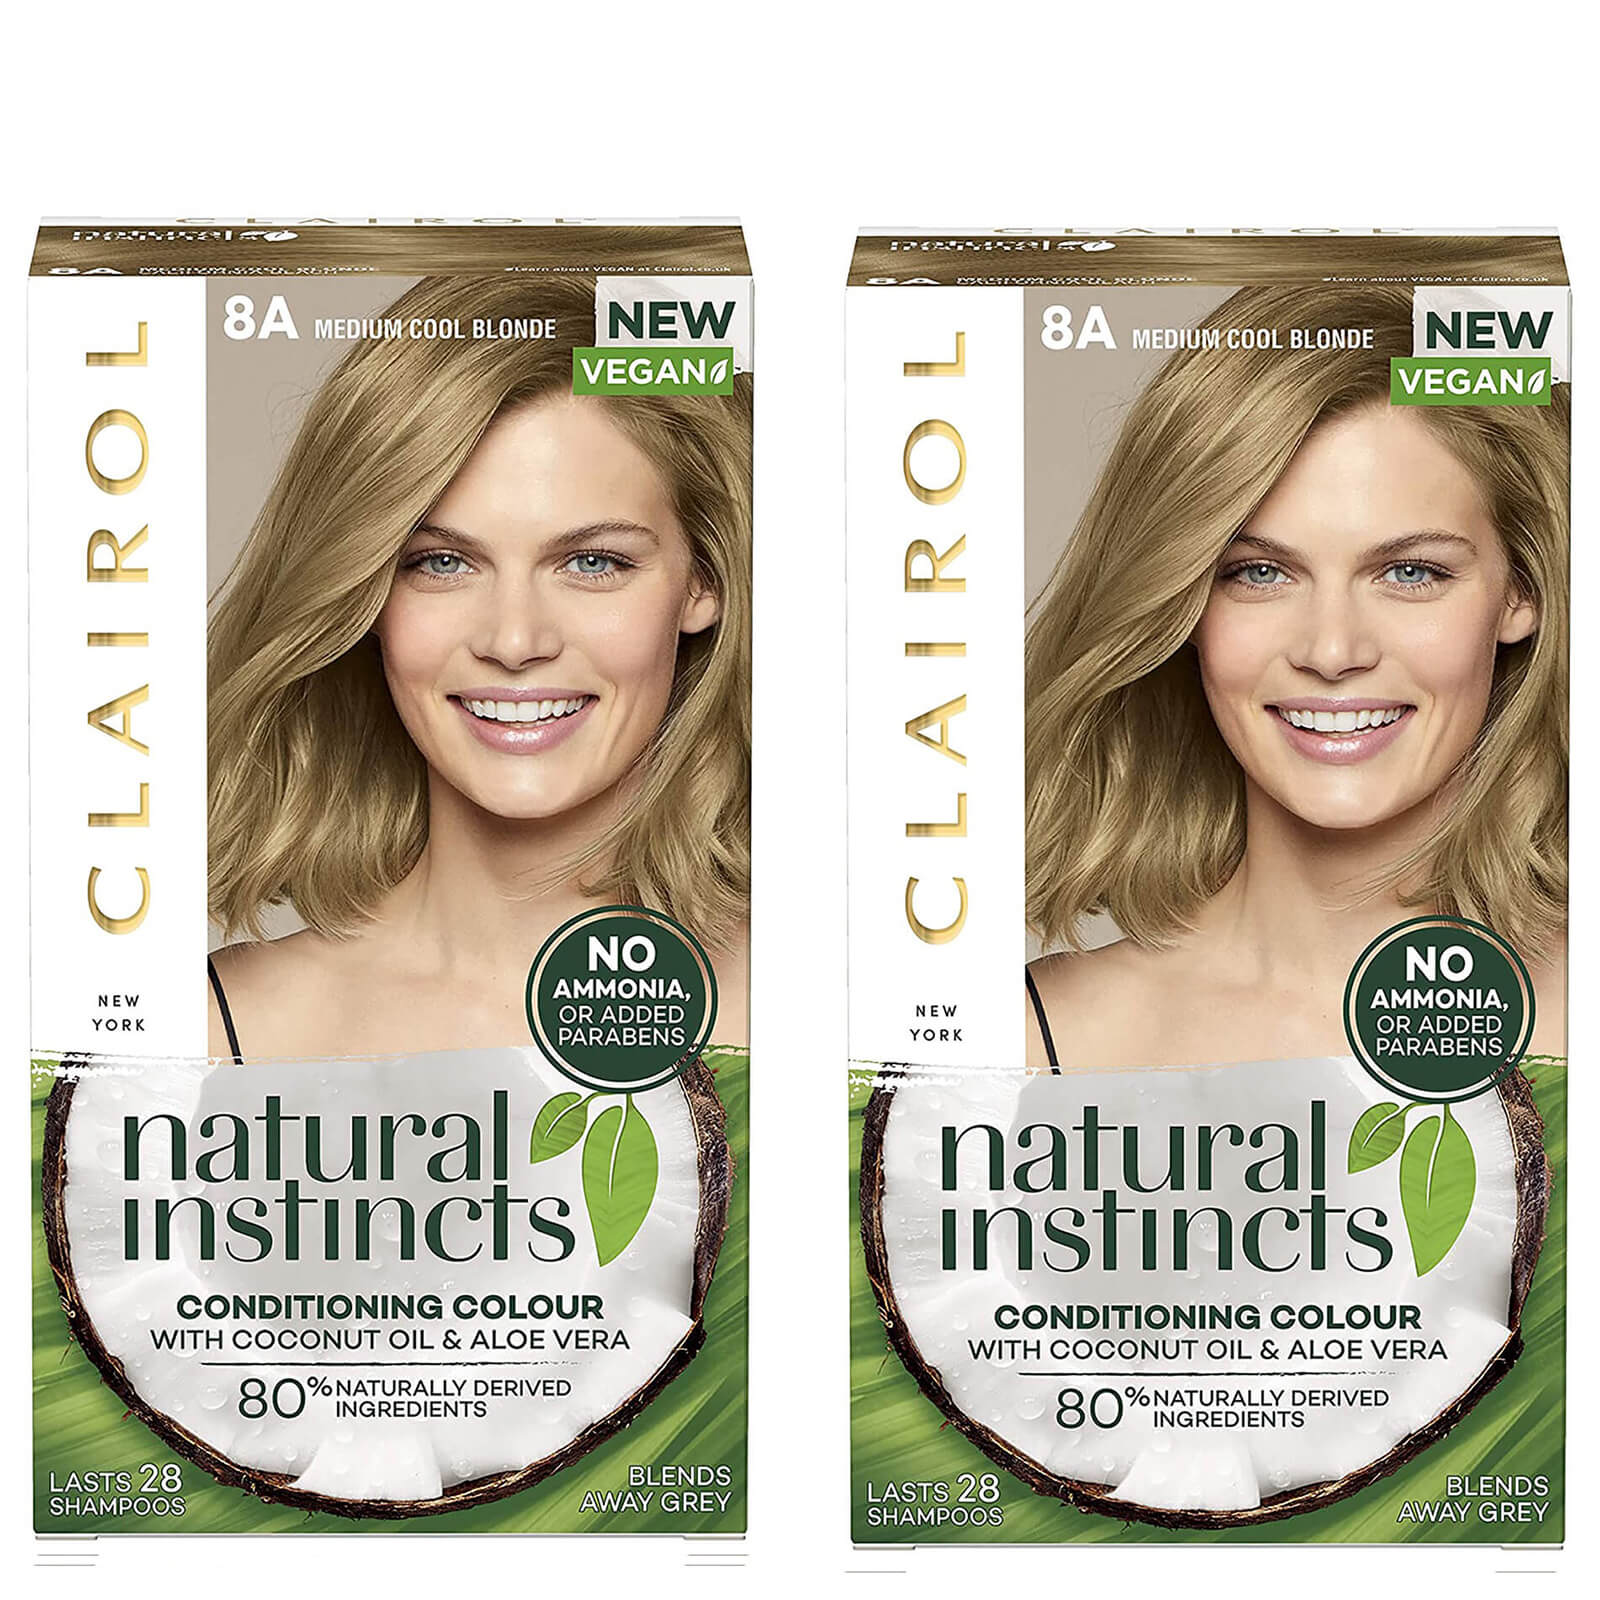 Clairol Natural Instincts Semi-Permanent No Ammonia Vegan Hair Dye Duo (Various Shades) - 8A Medium Cool Blonde